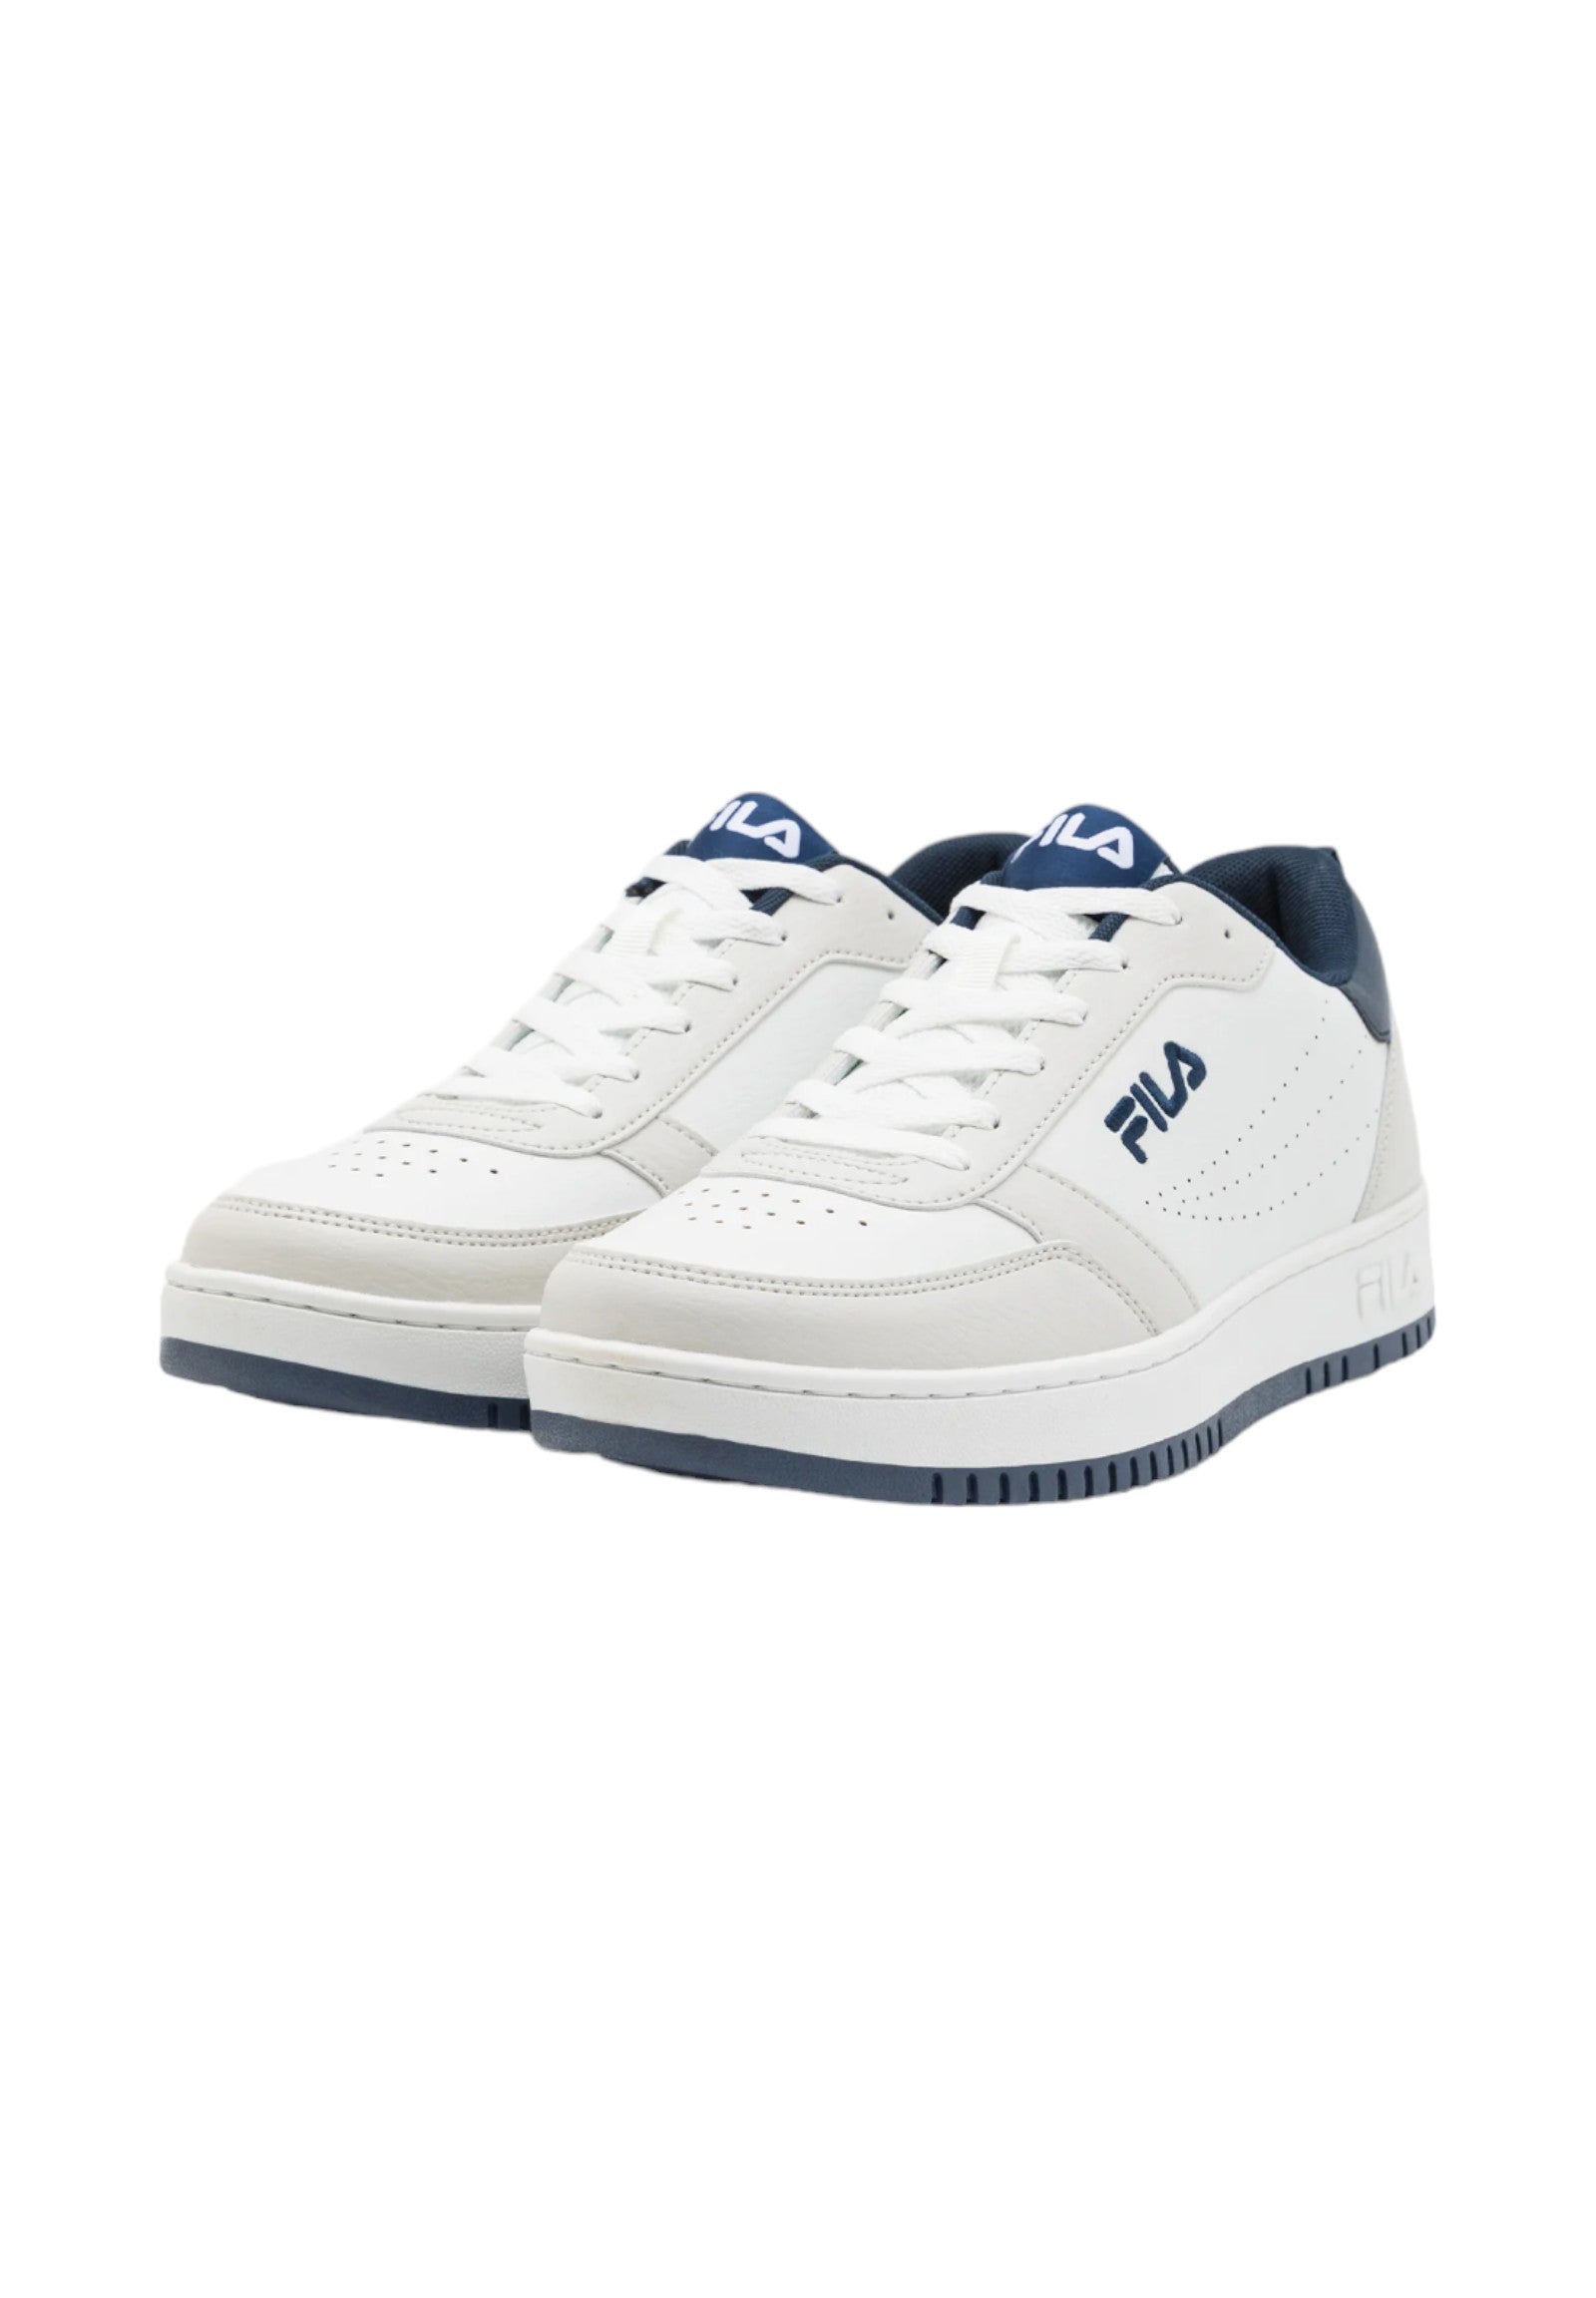 Fila Sneakers Ffm0308 White, Fila Navy